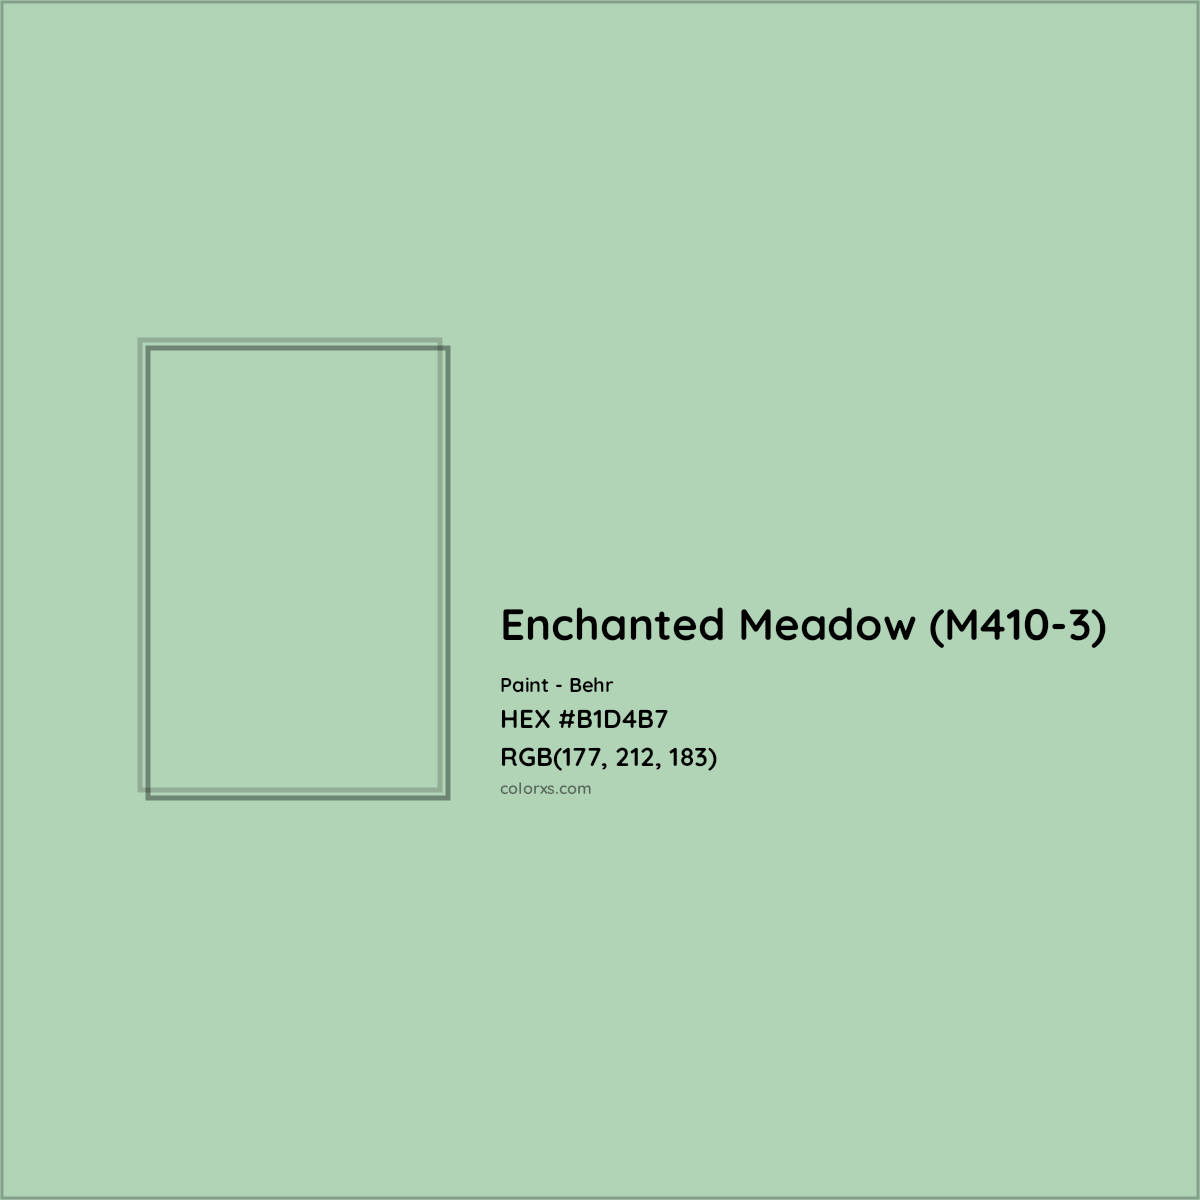 HEX #B1D4B7 Enchanted Meadow (M410-3) Paint Behr - Color Code